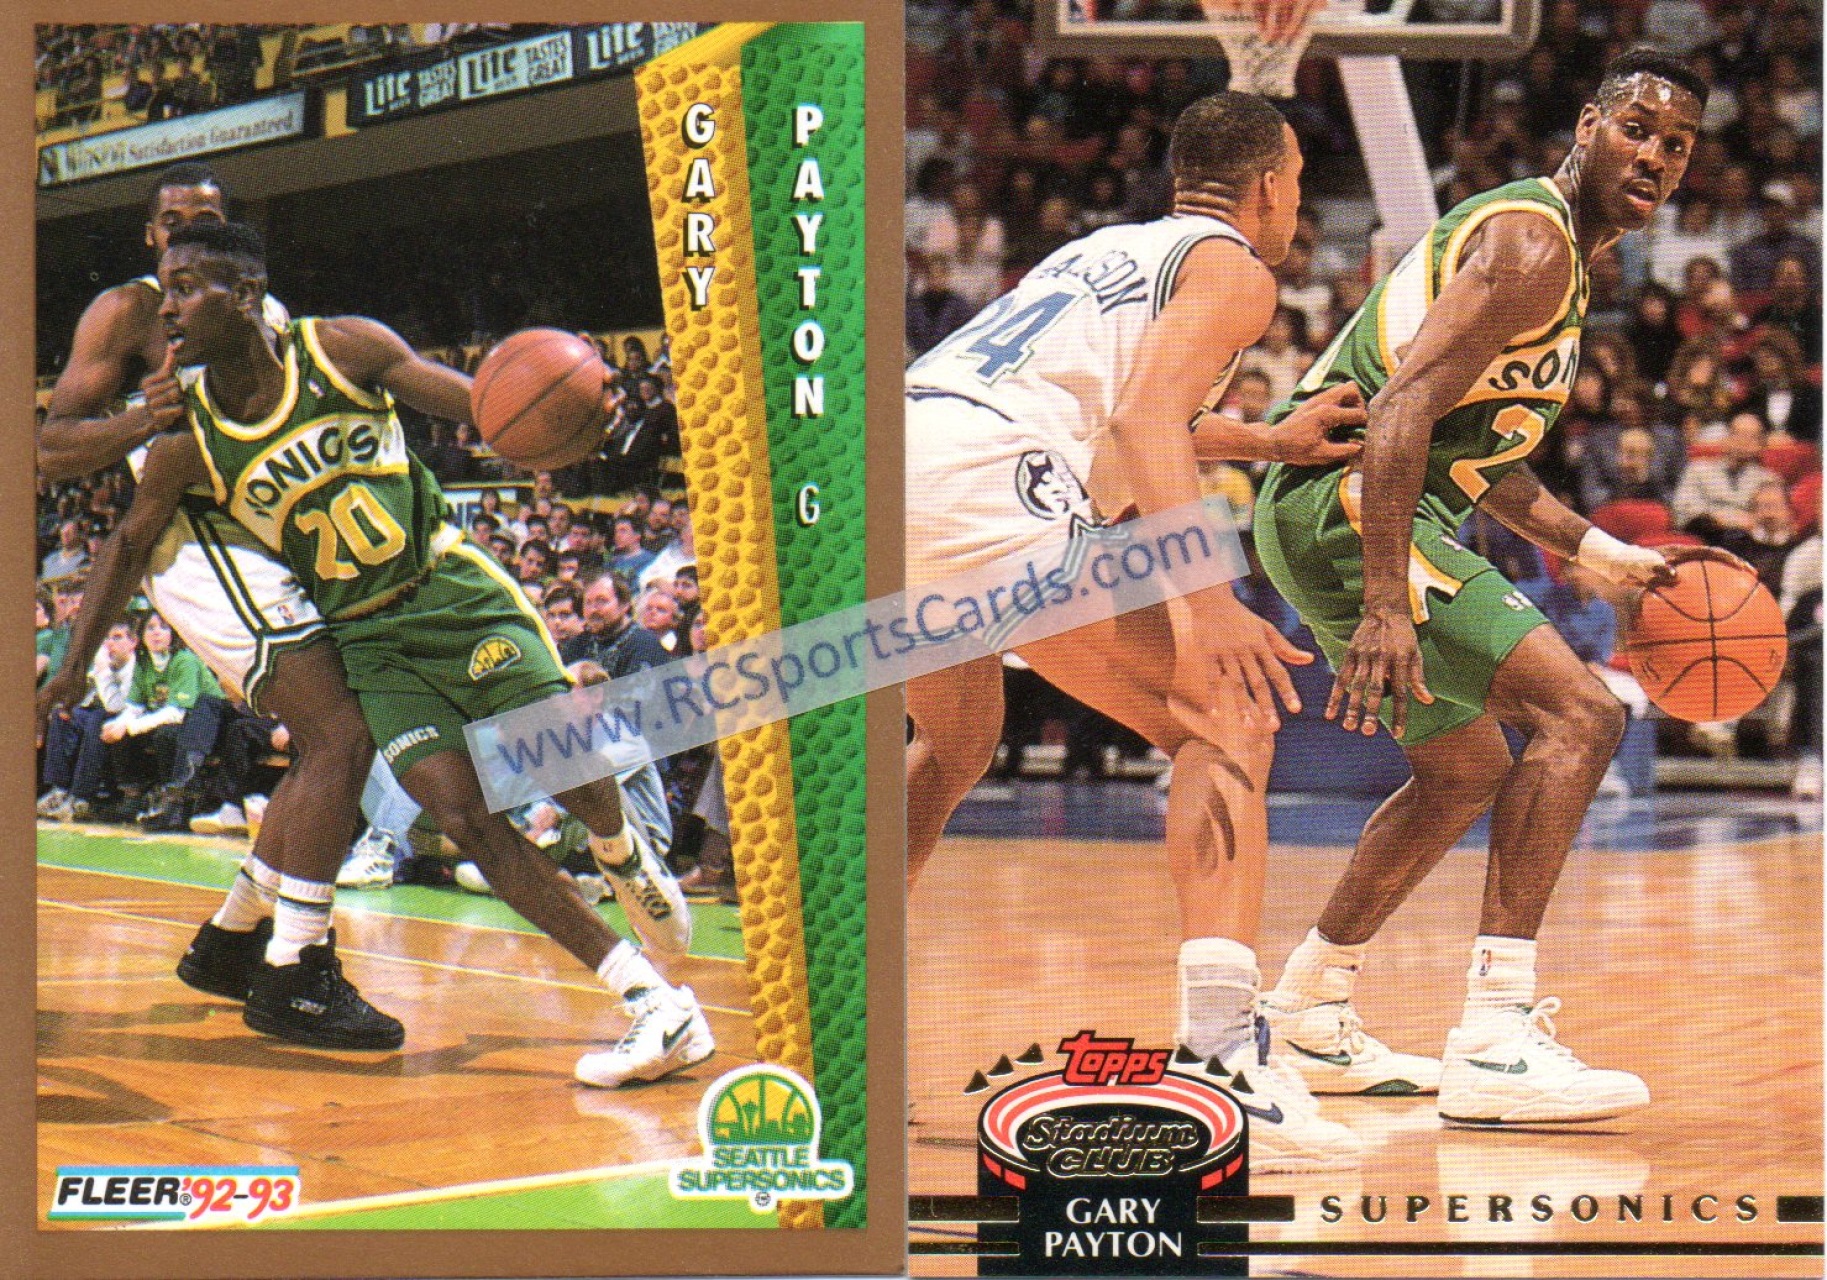 1993 Topps Sam Perkins #336 Basketball Card Seattle SuperSonics